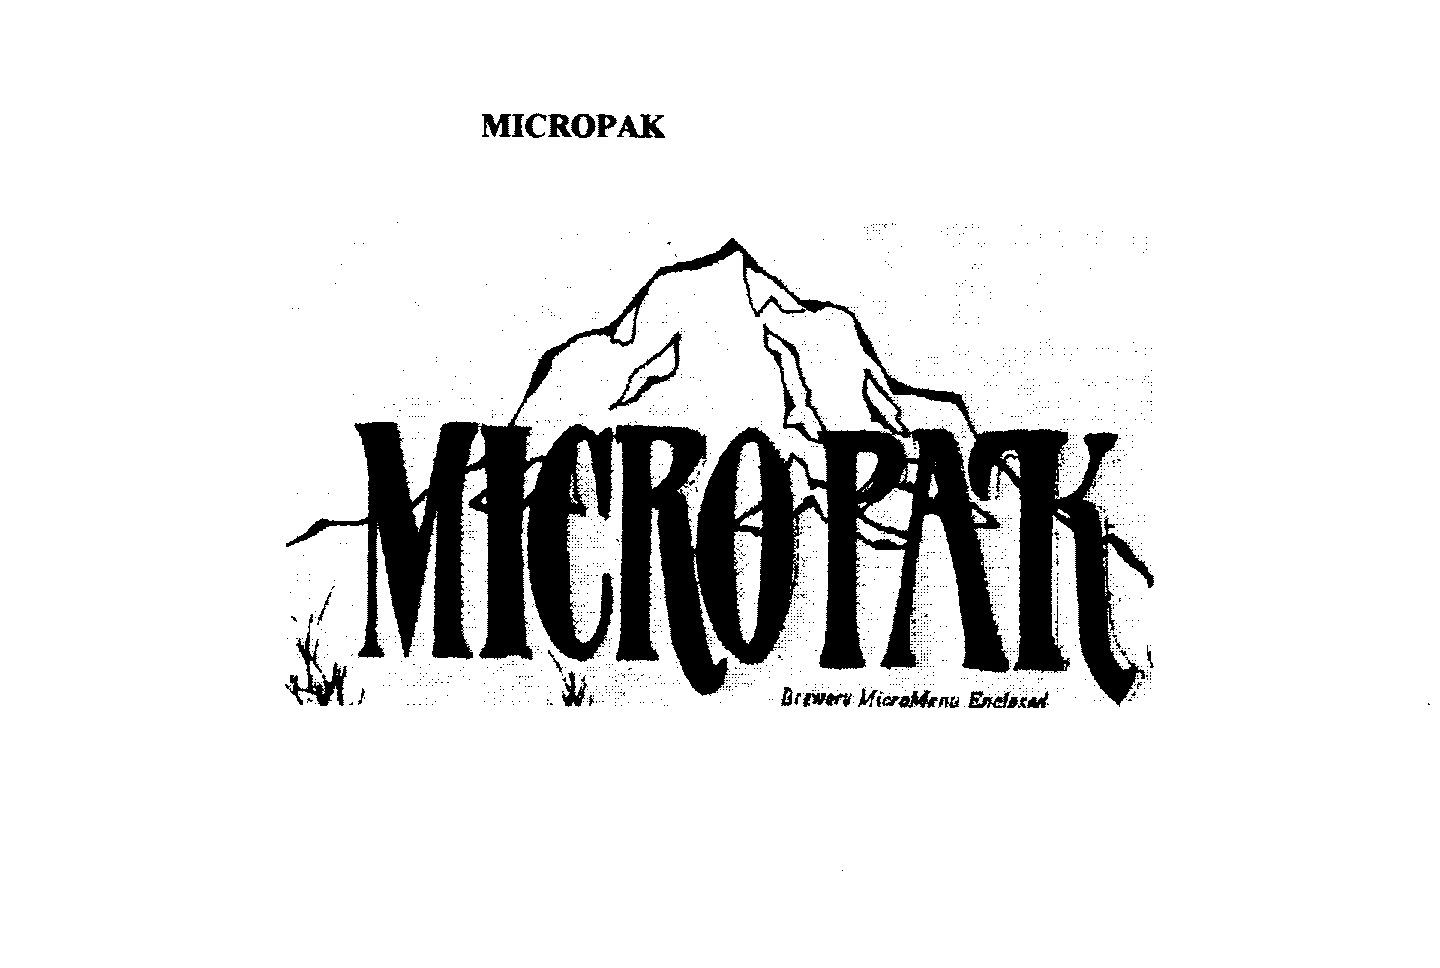 Trademark Logo MICROPAK